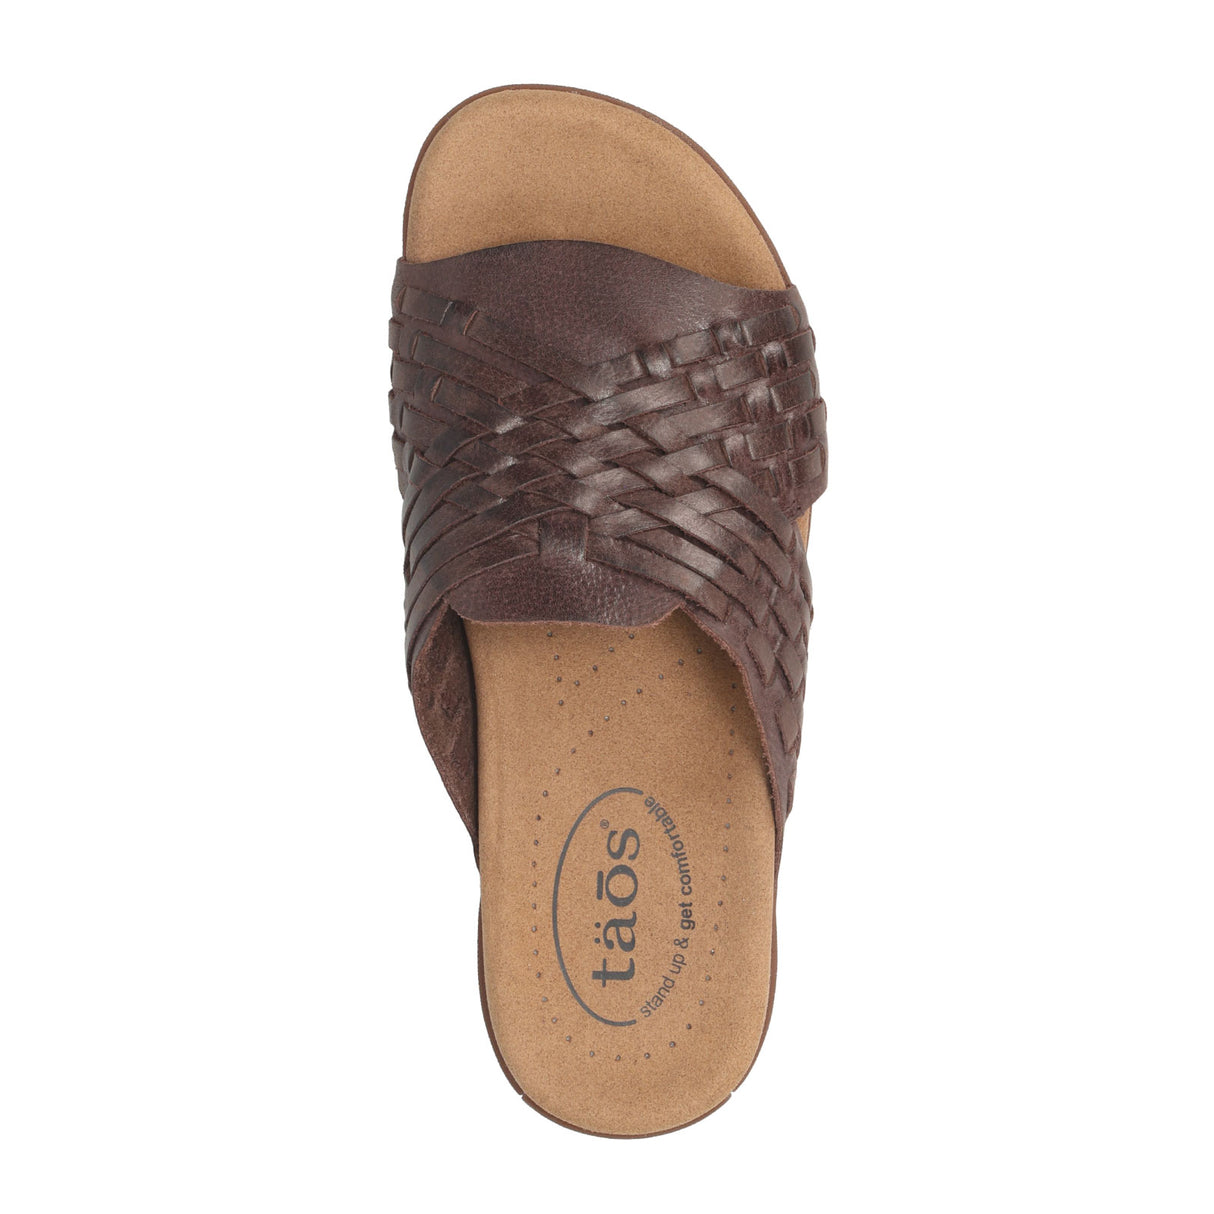 Taos Guru Slide Sandal (Women) - Chocolate Sandals - Slide - The Heel Shoe Fitters